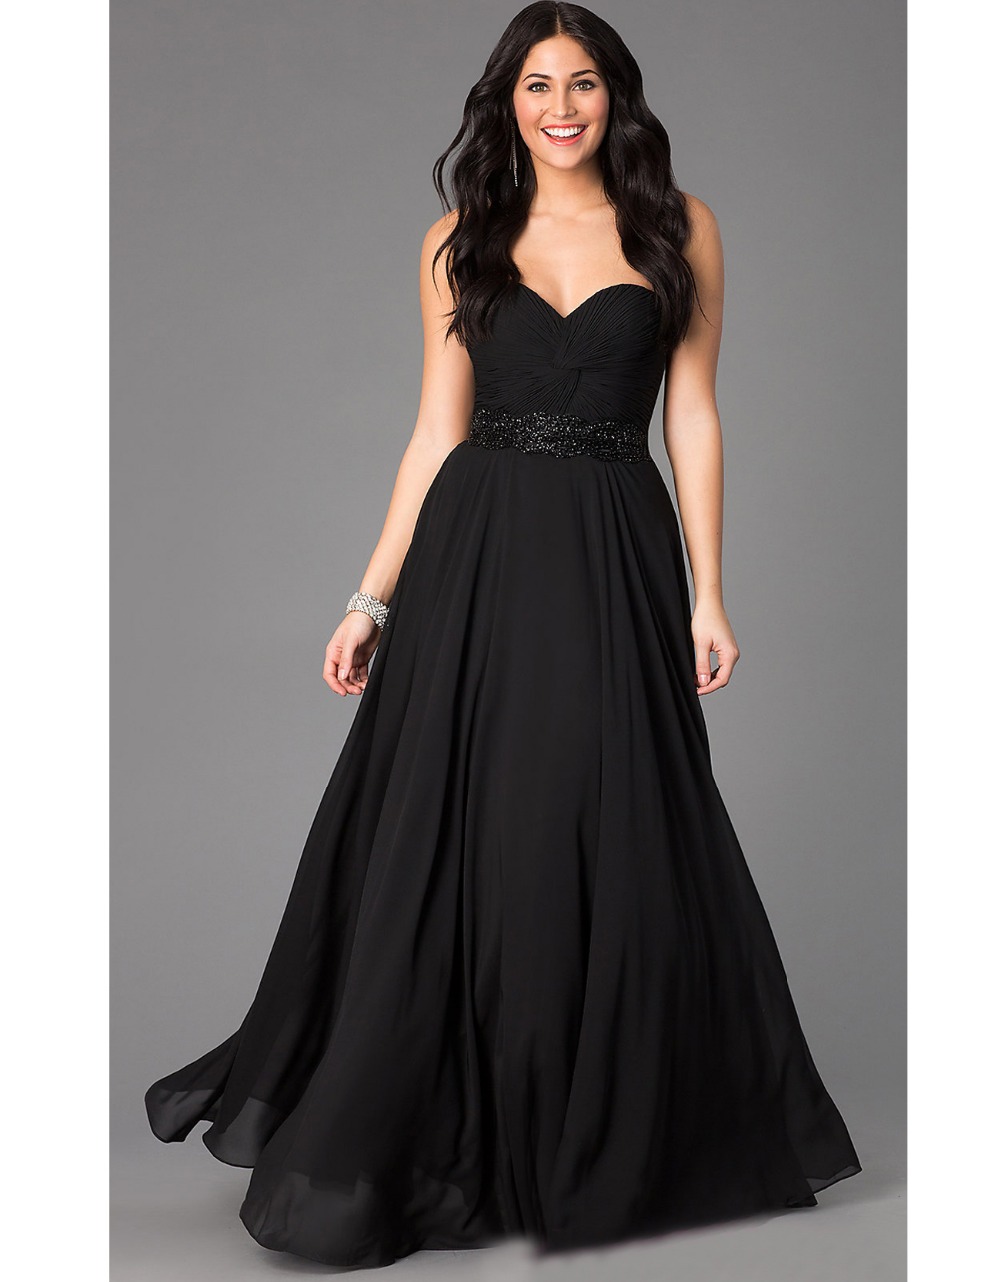 Grossiste robe noire courte